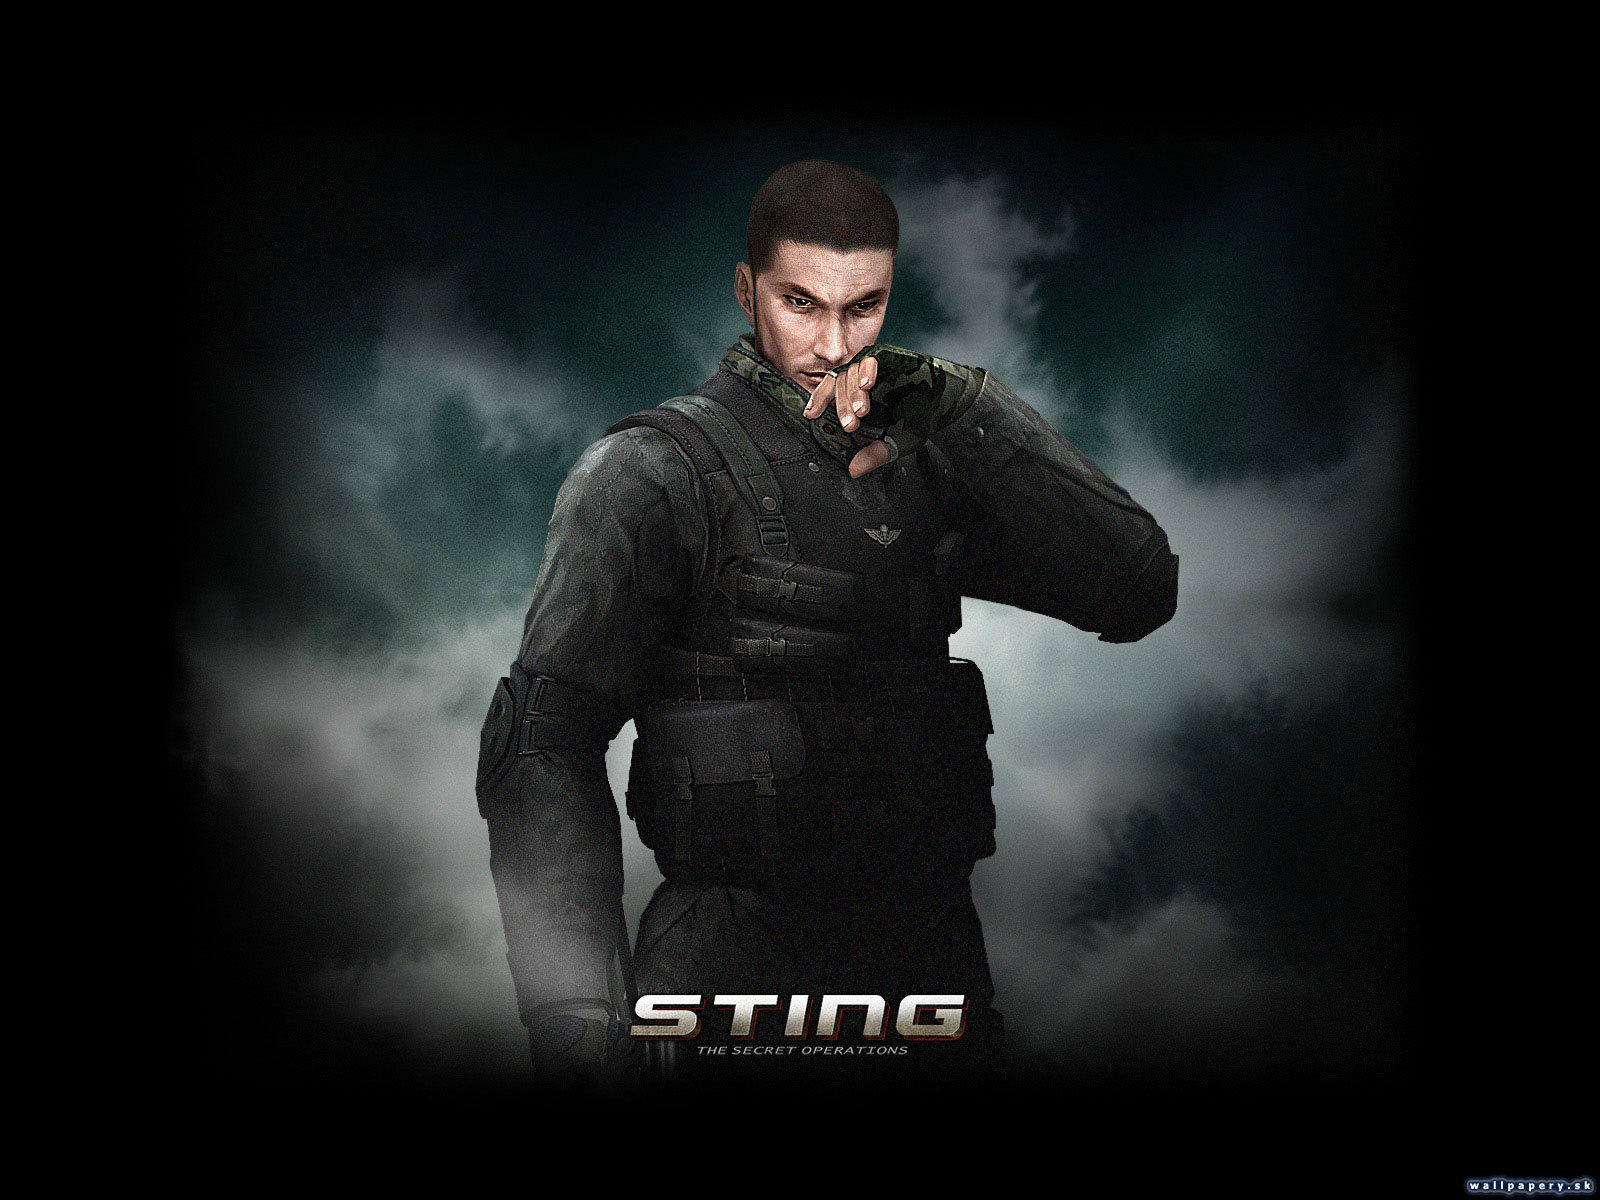 Sting: The Secret Operations - wallpaper 9